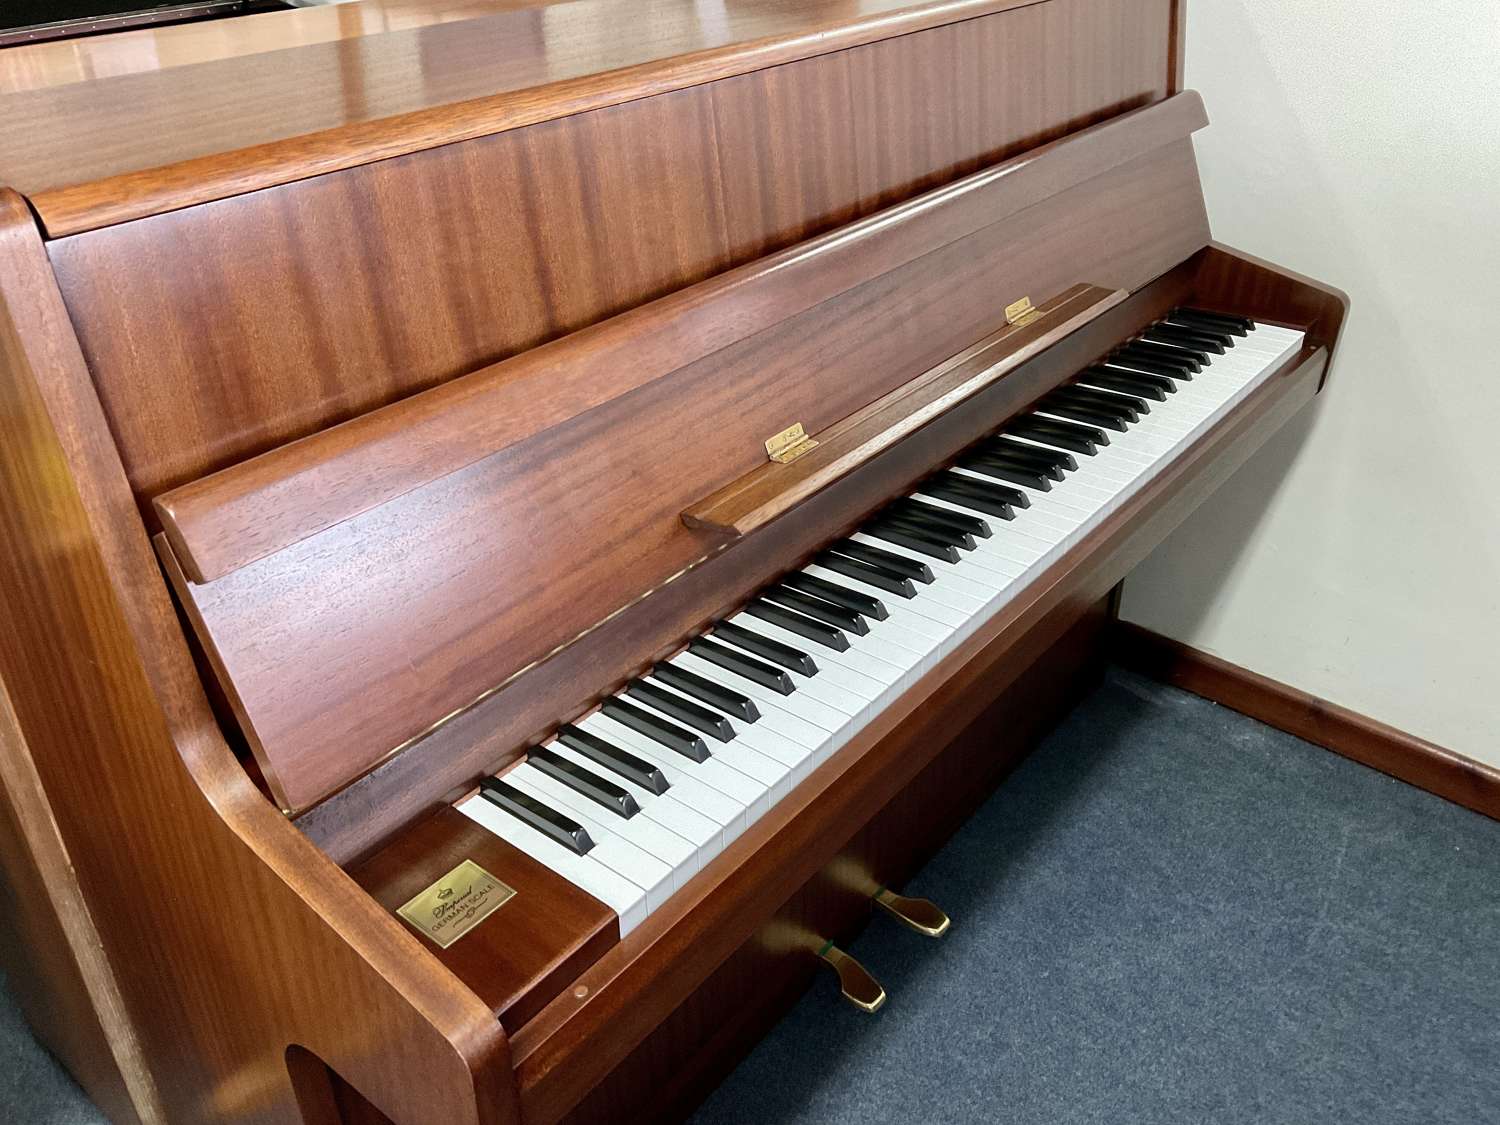 Reid-Sohn upright piano for sale